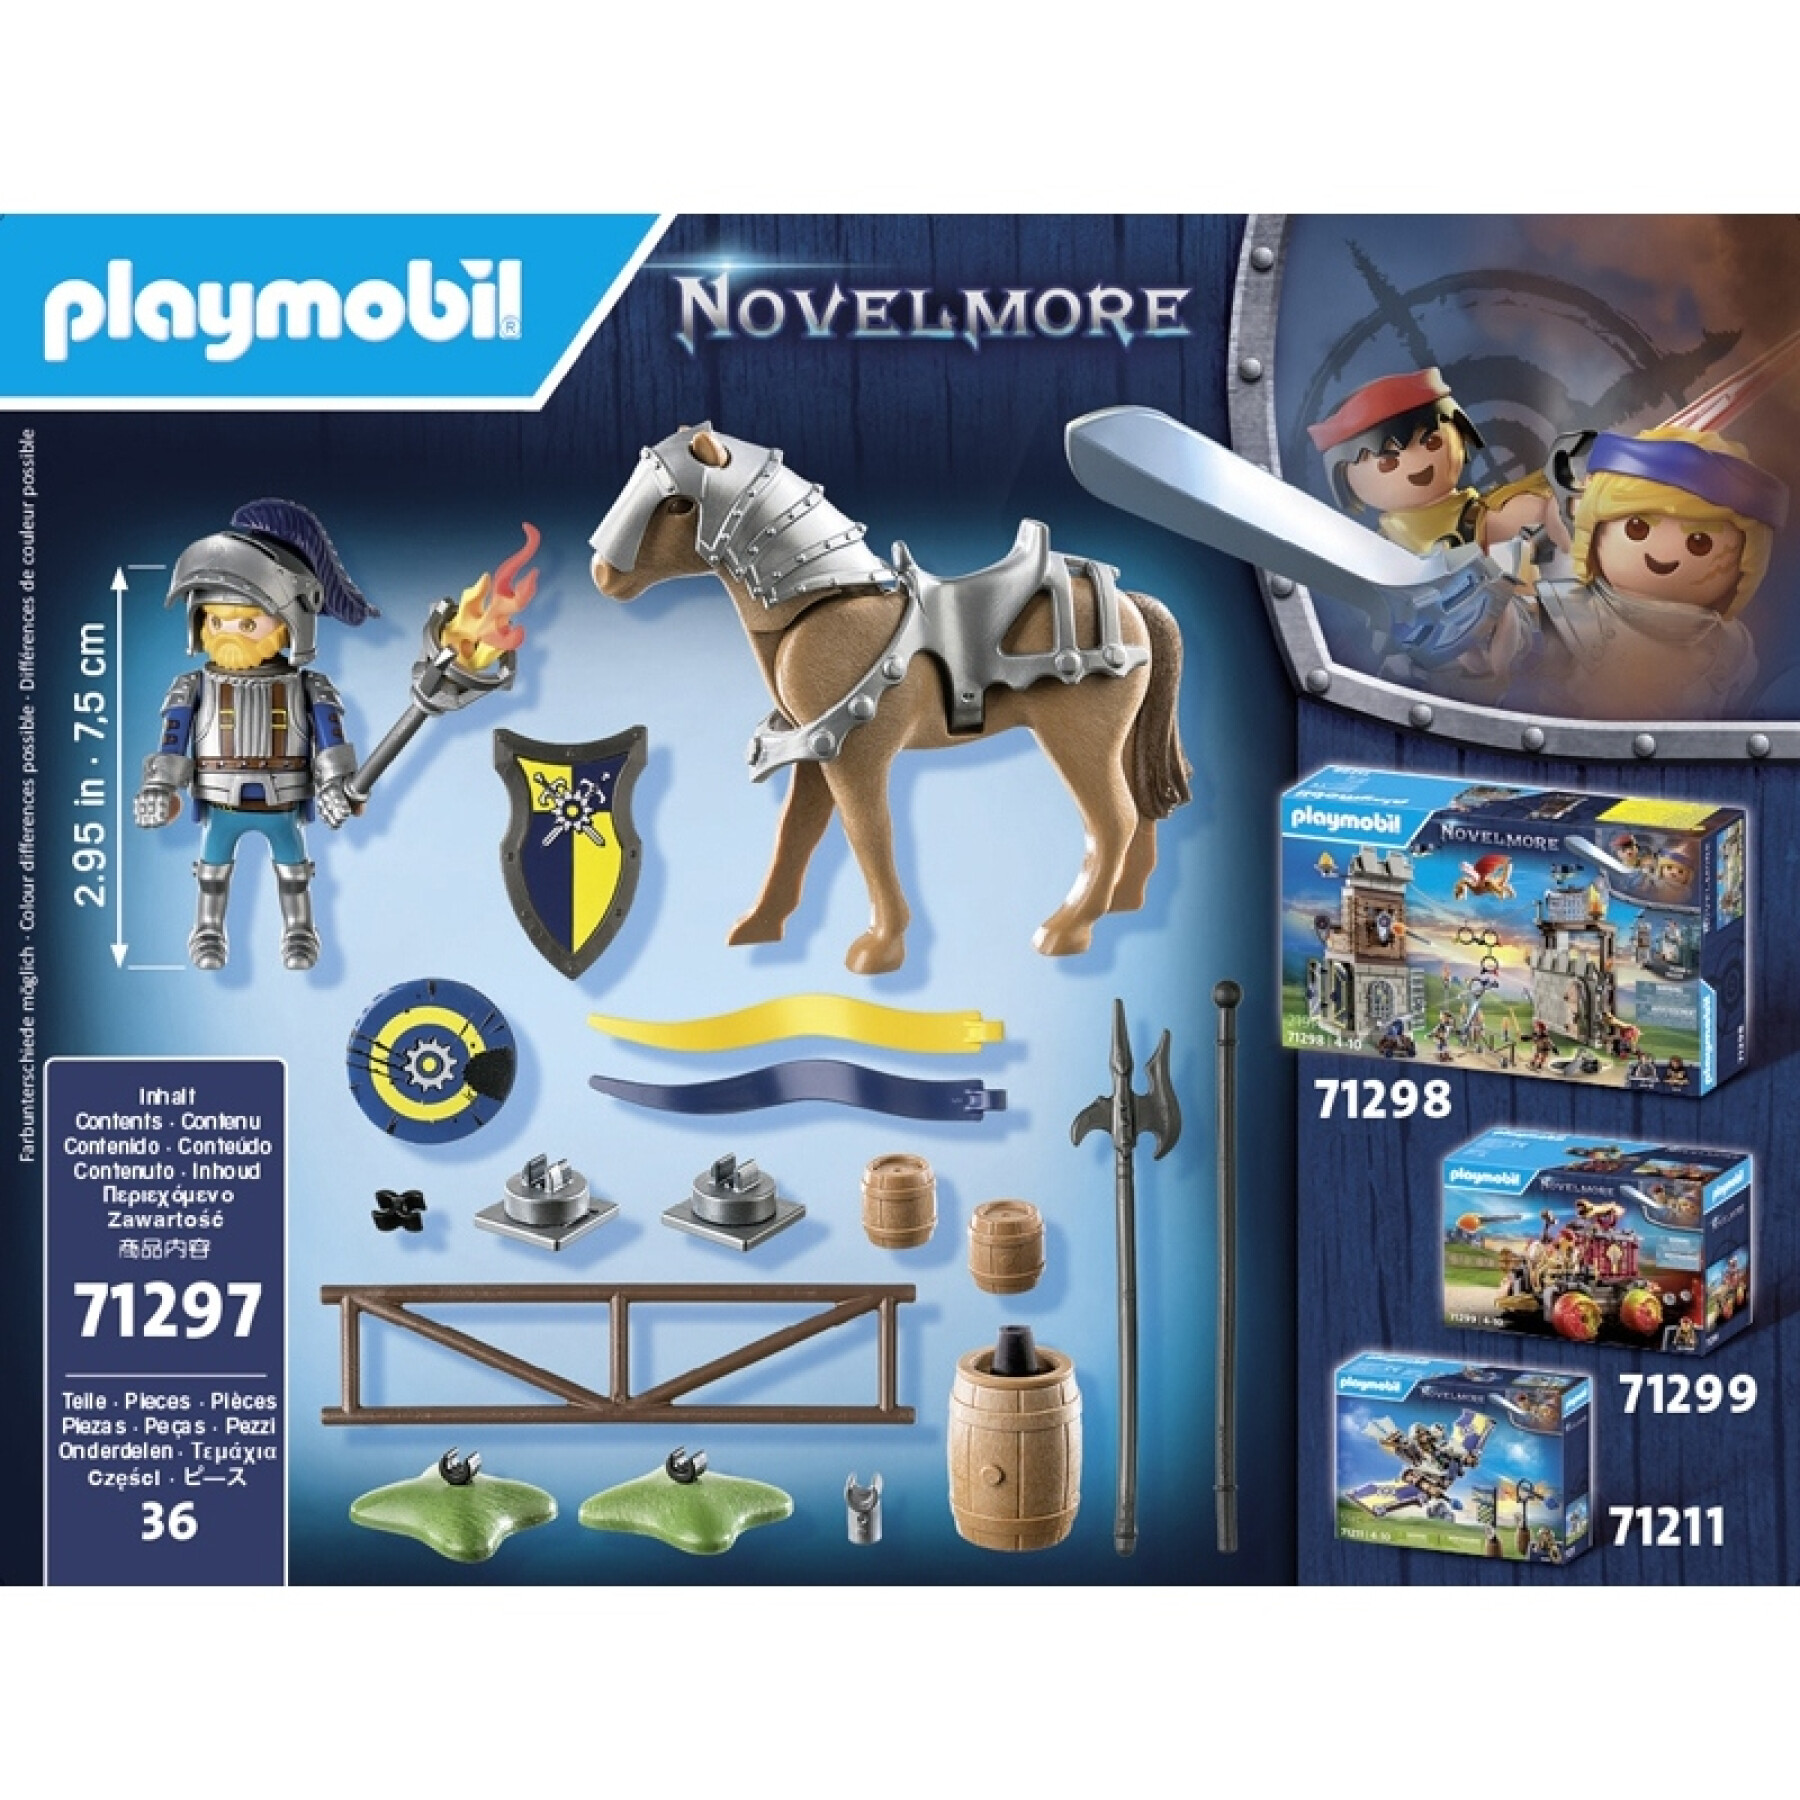 Knight figurine Playmobil Novelmore